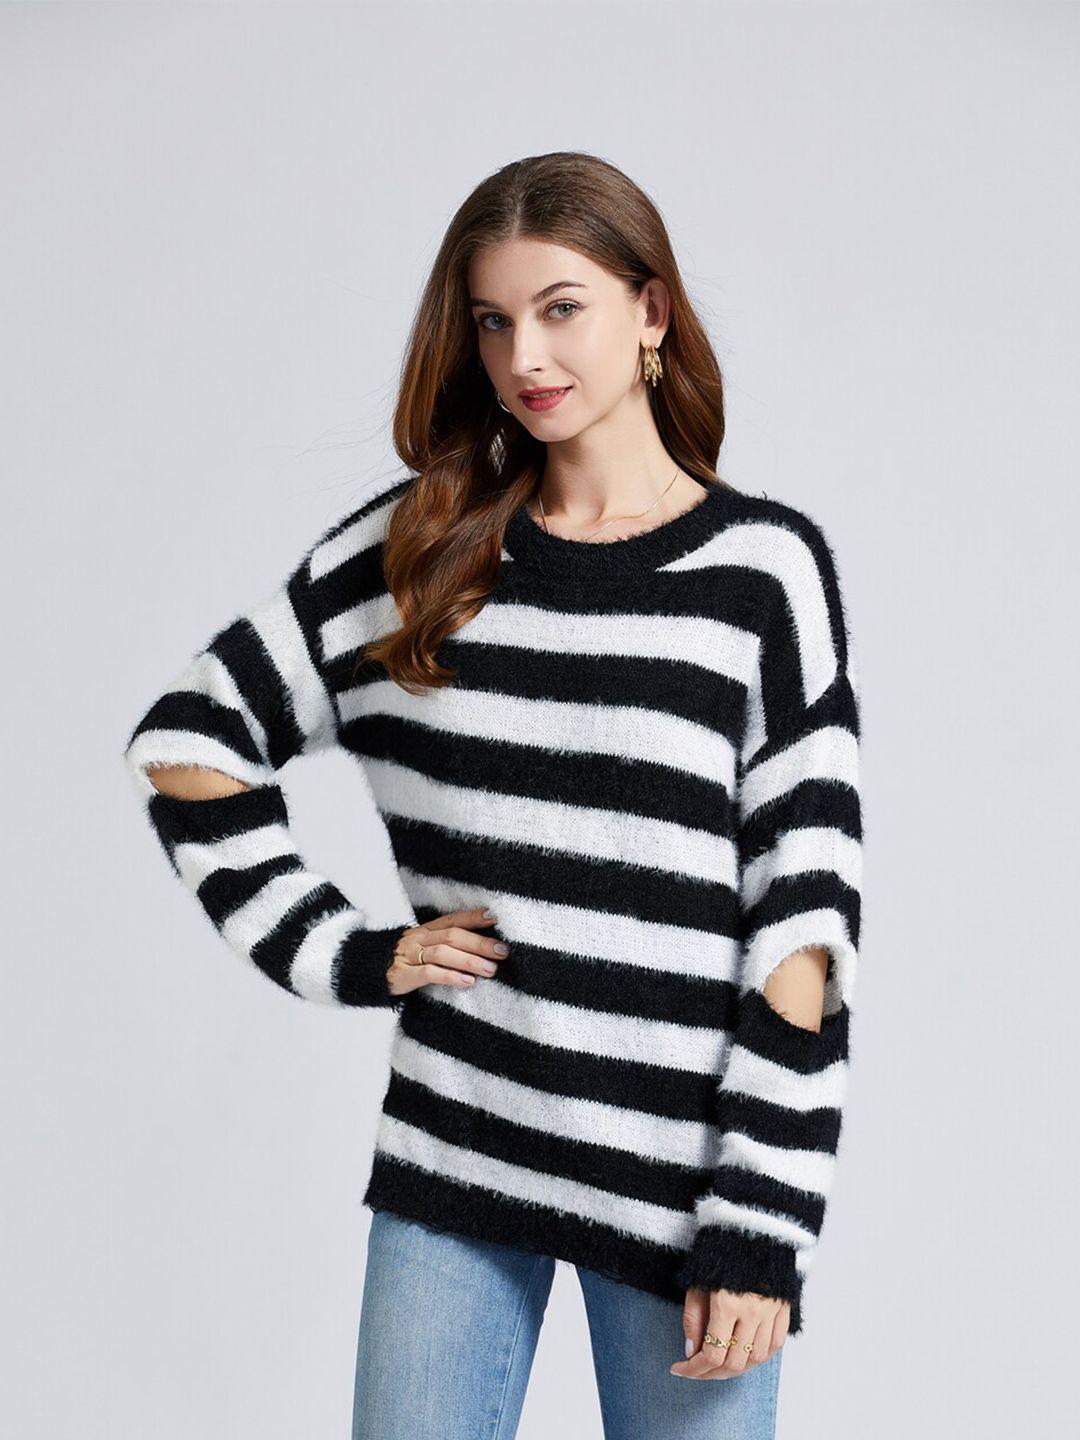 jc collection women black & white striped striped pullover